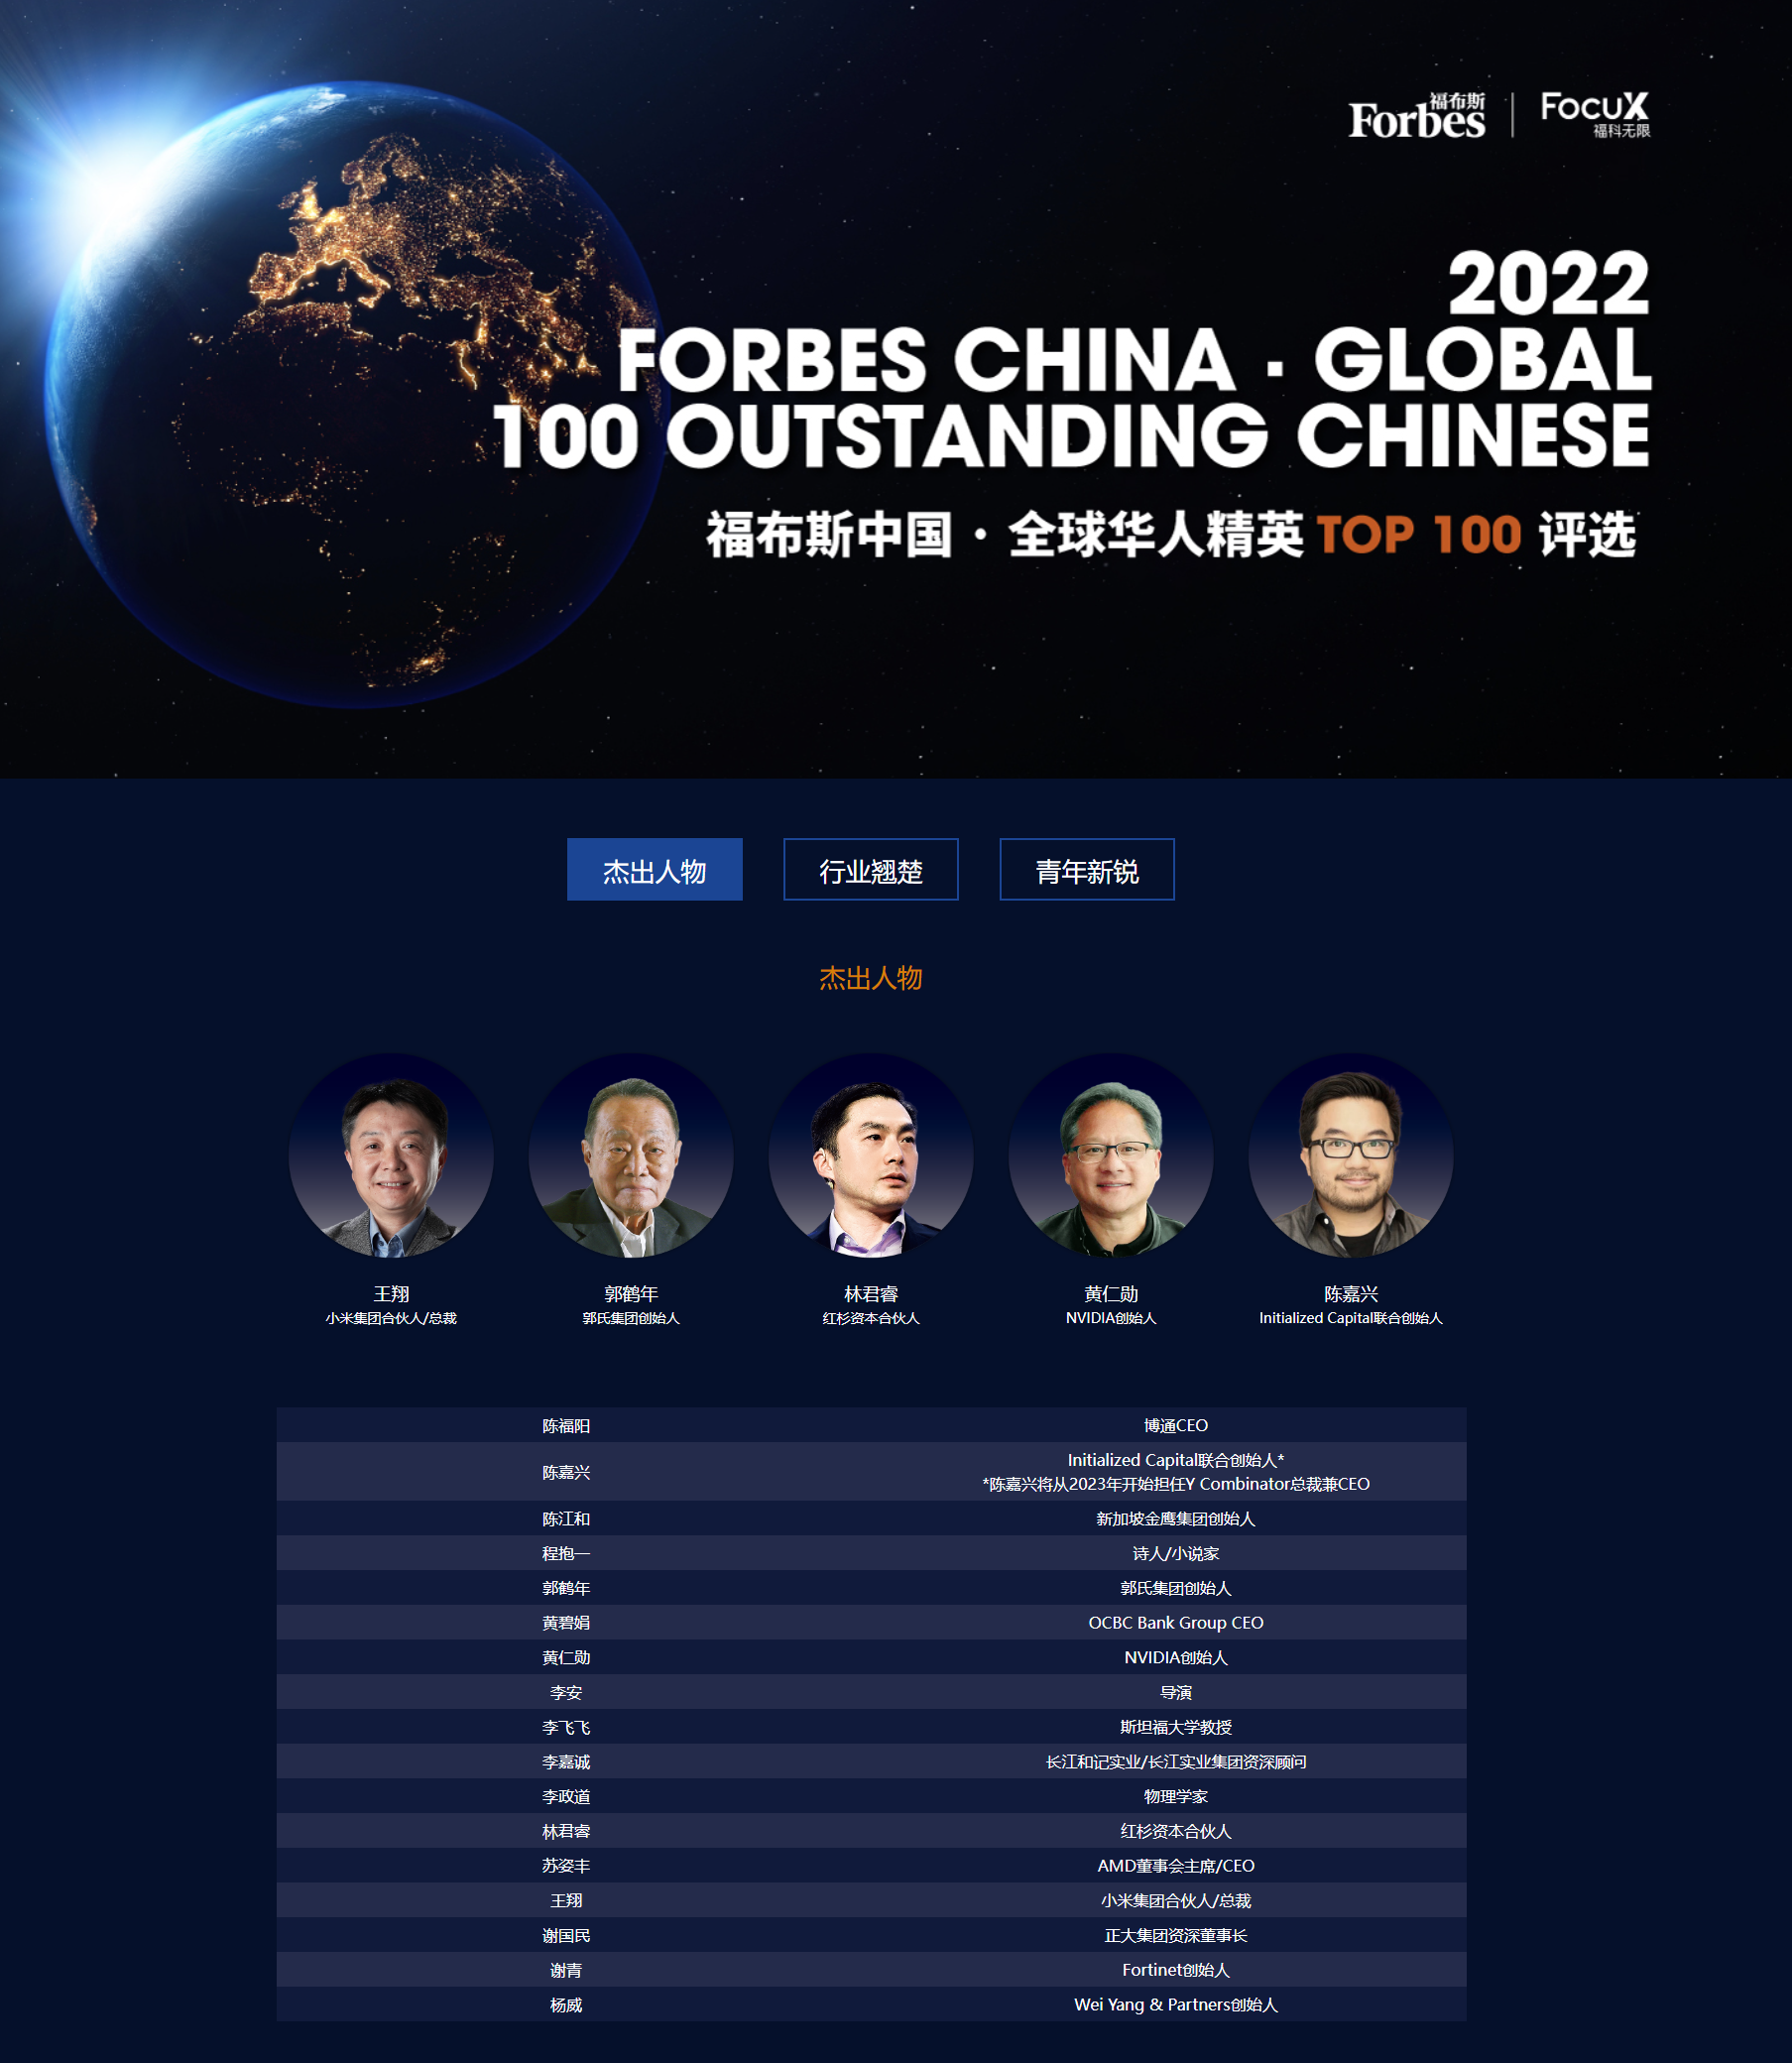 Мелстрой форбс на каком месте в списке. Список форбс. Список Forbes 2022. 1 В списке форбс 2022. Первое место в списке форбс.